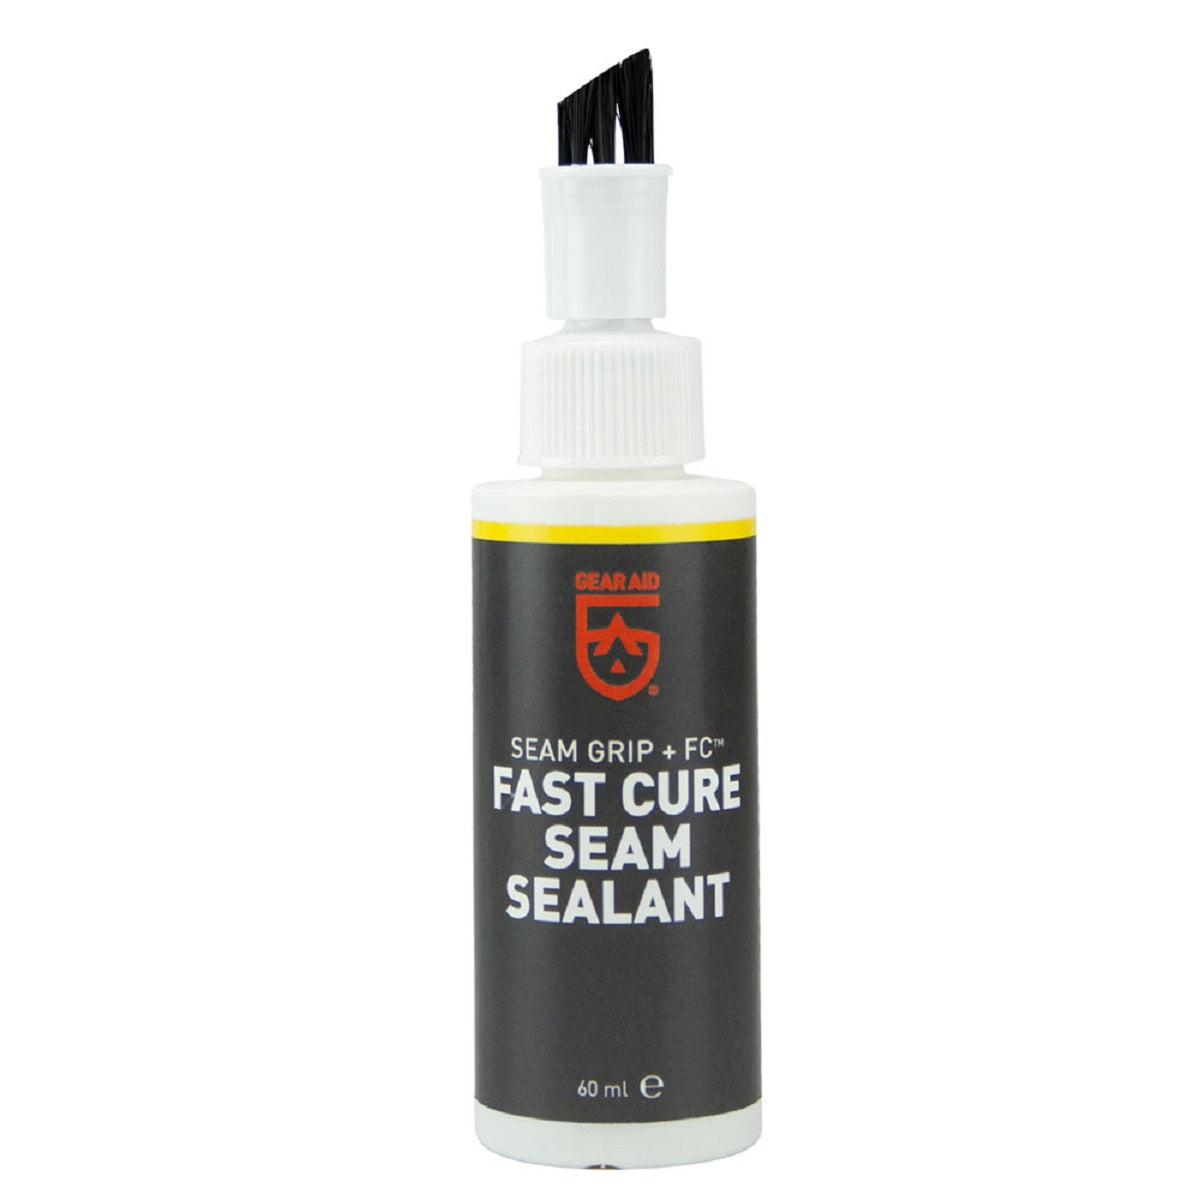 Gear Aid Seam Grip+FC Fast Cure Seam Sealant - 60ml (by McNett)